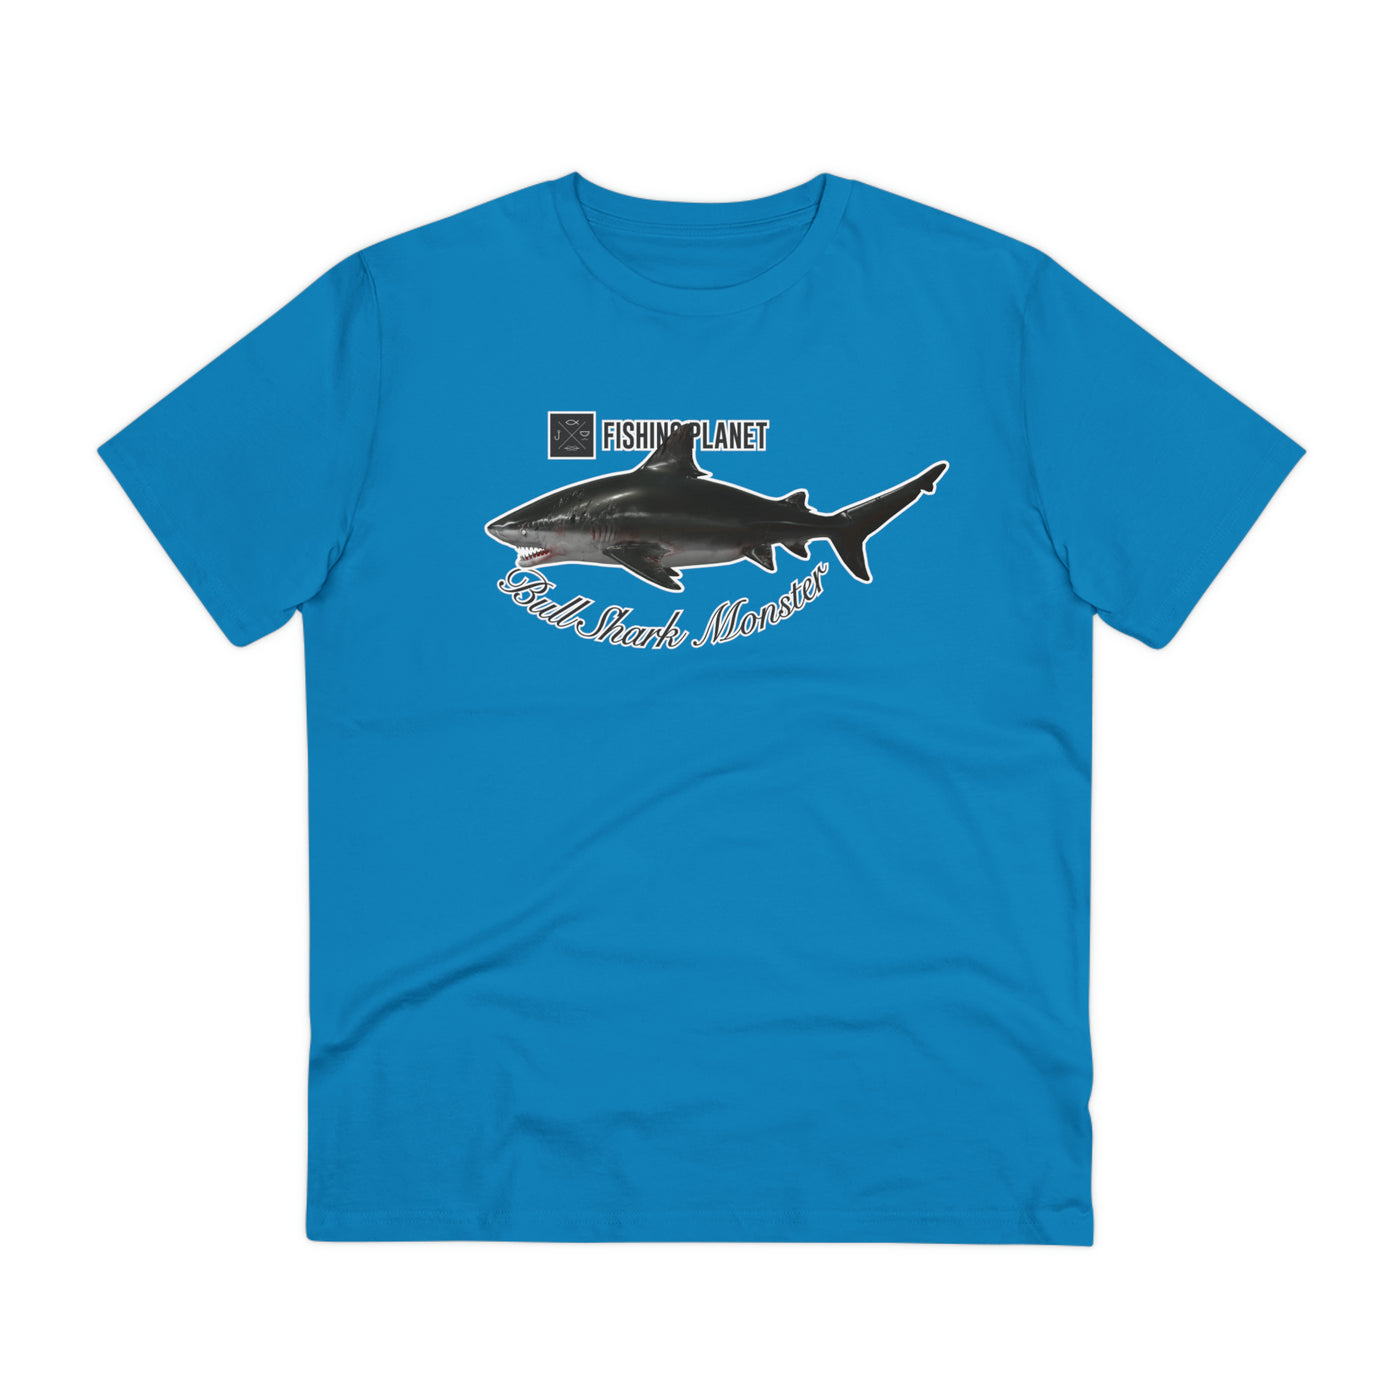 Fishing Planet Bull Shark T-shirt